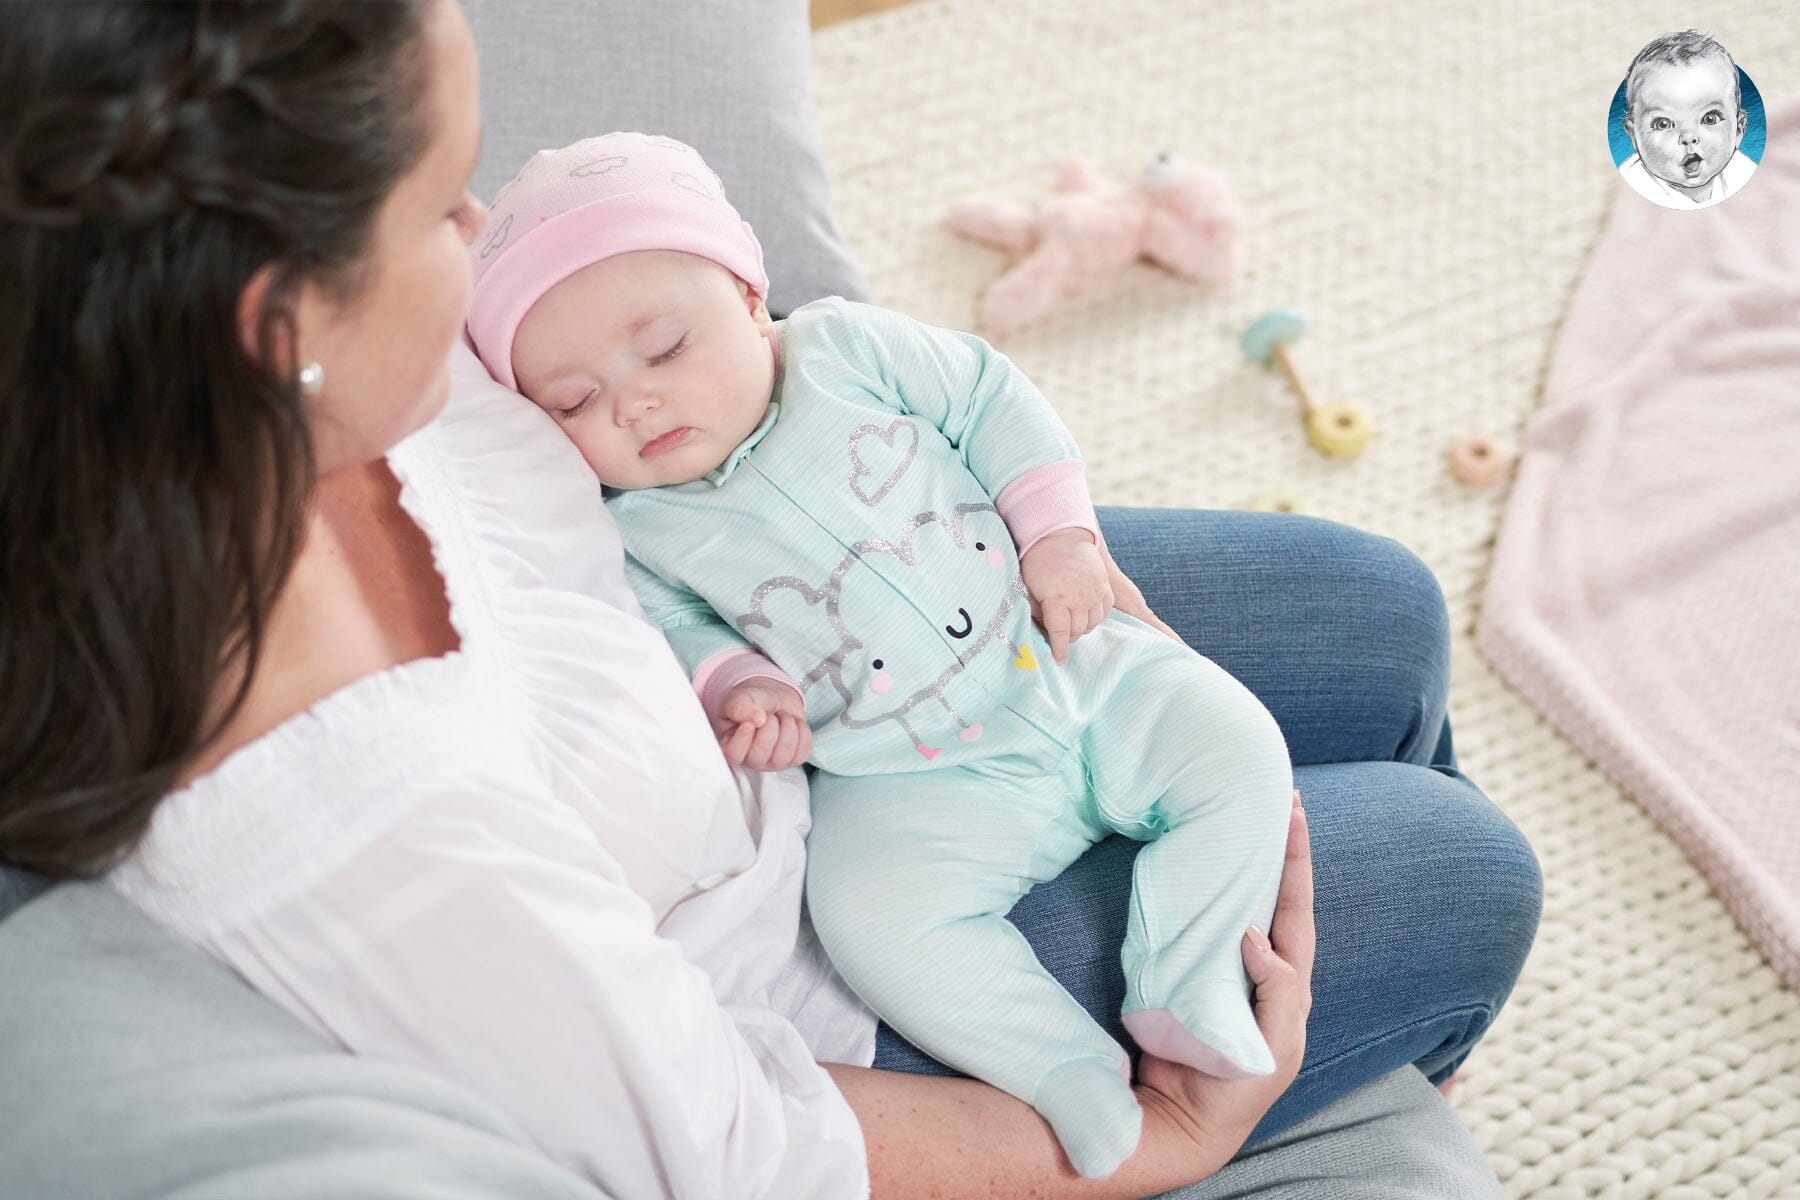 Can a Newborn Sleep in Just Footie Pajamas?